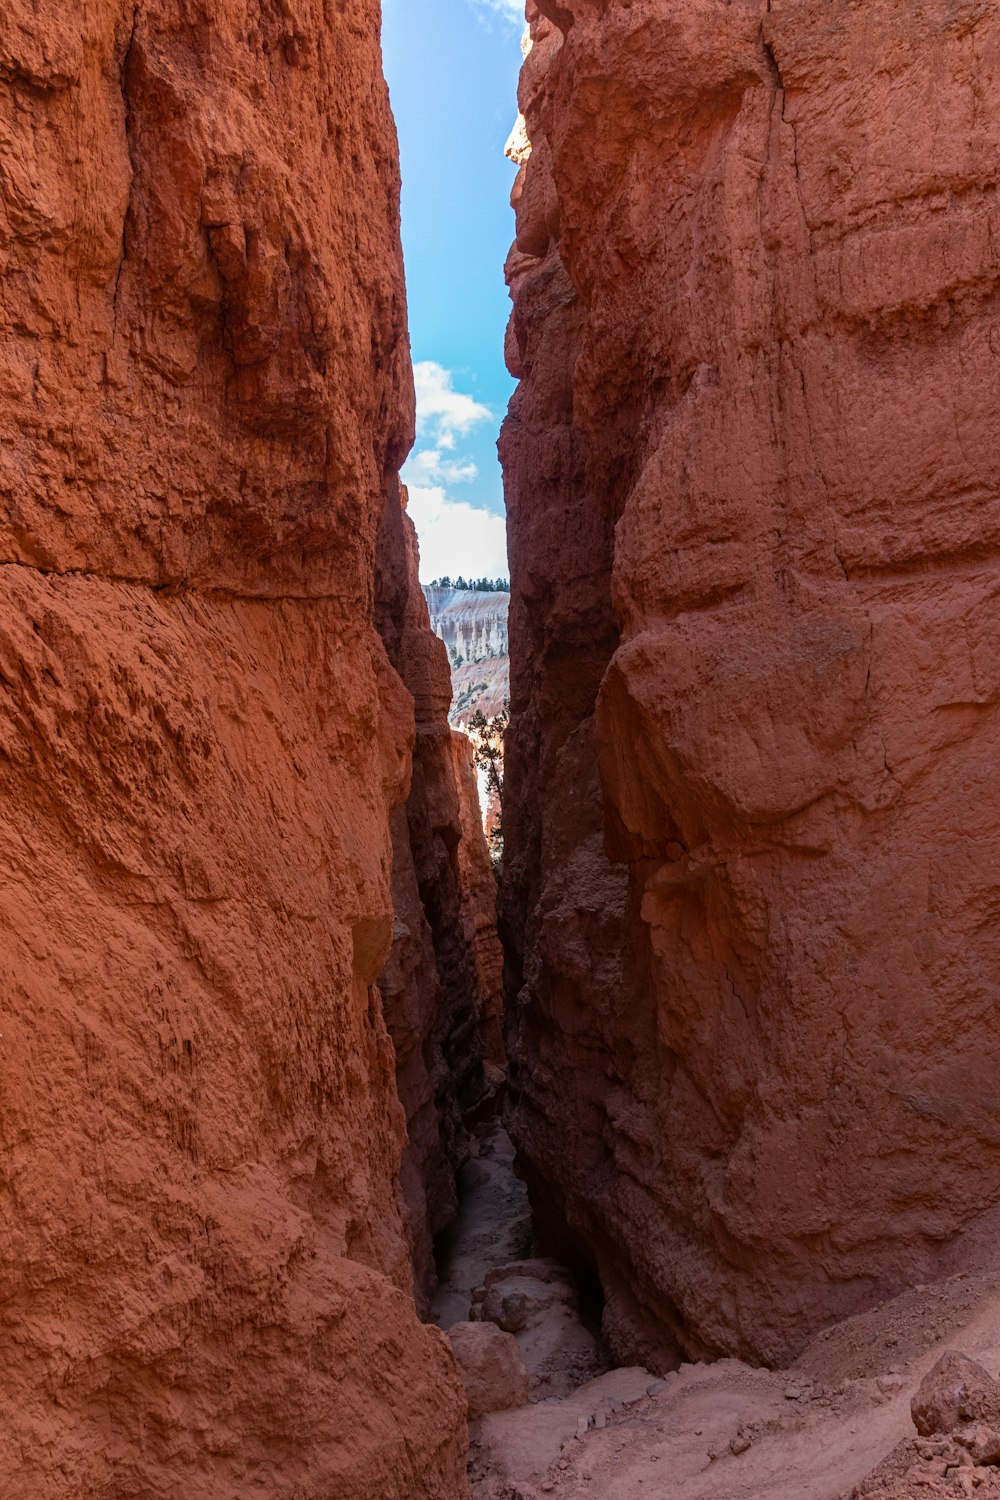 a view of a canyon